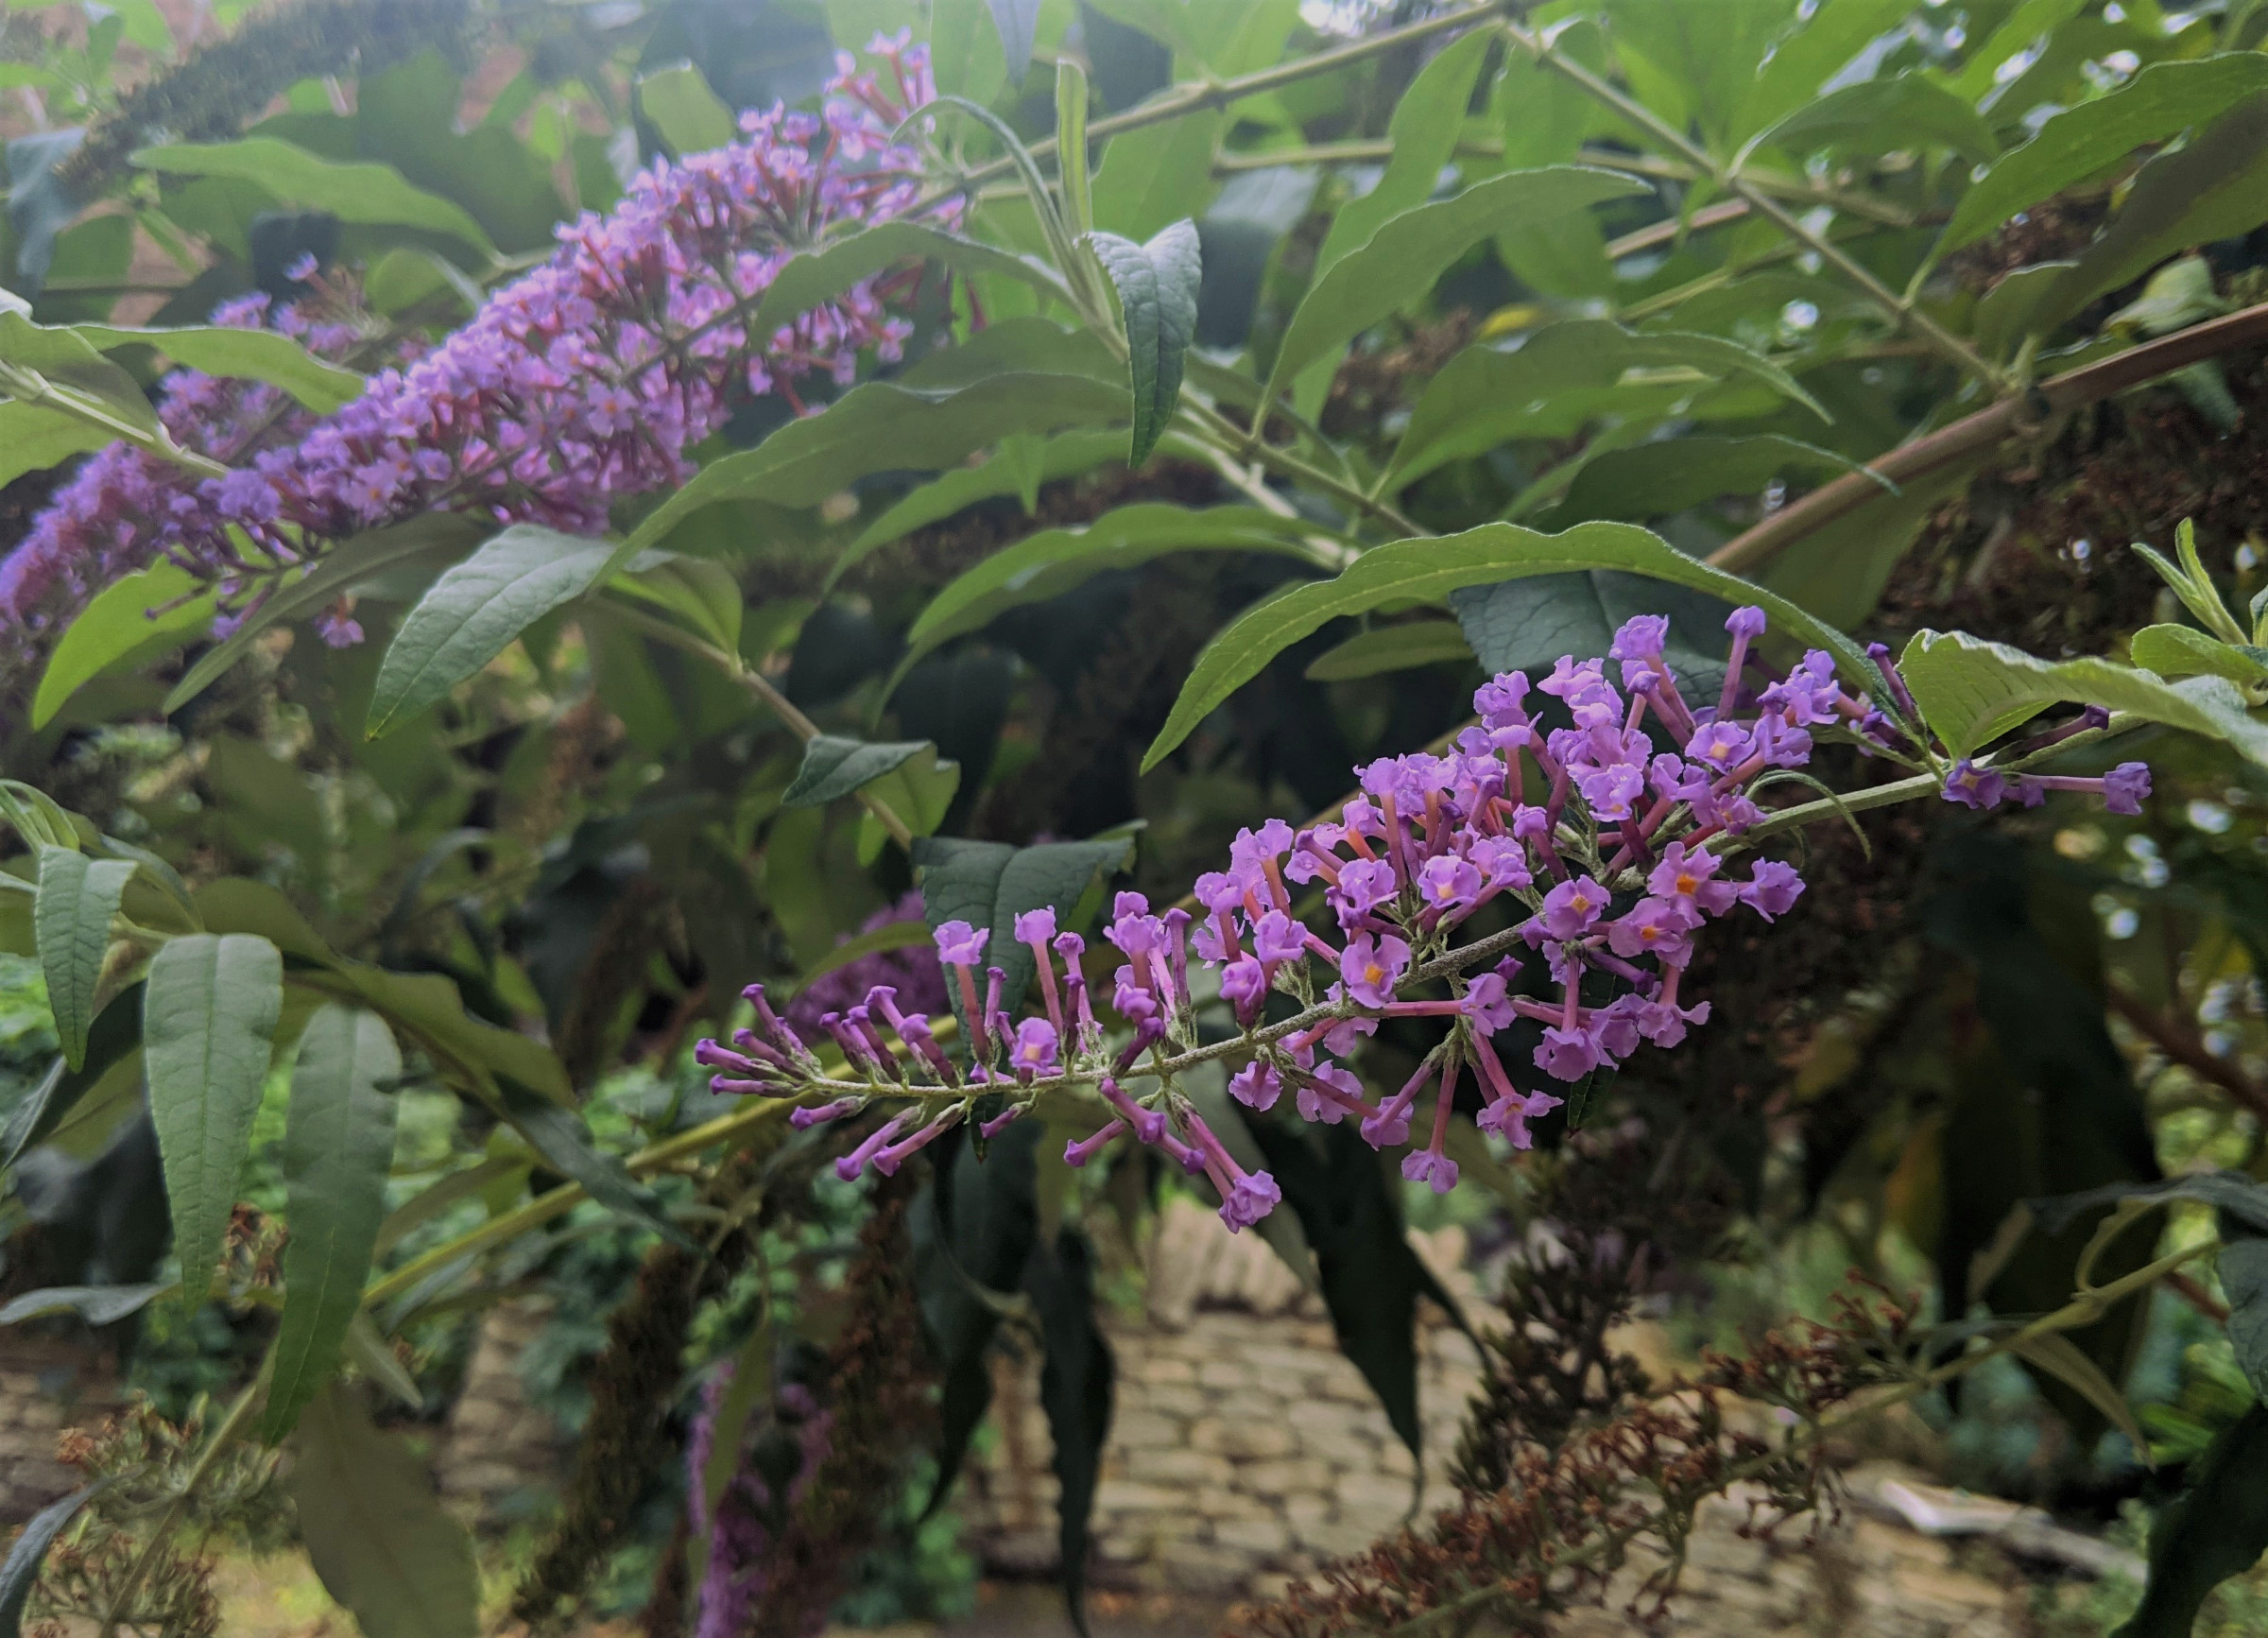 A close up shot of the purple flowered panicles of Buddleia Davidii